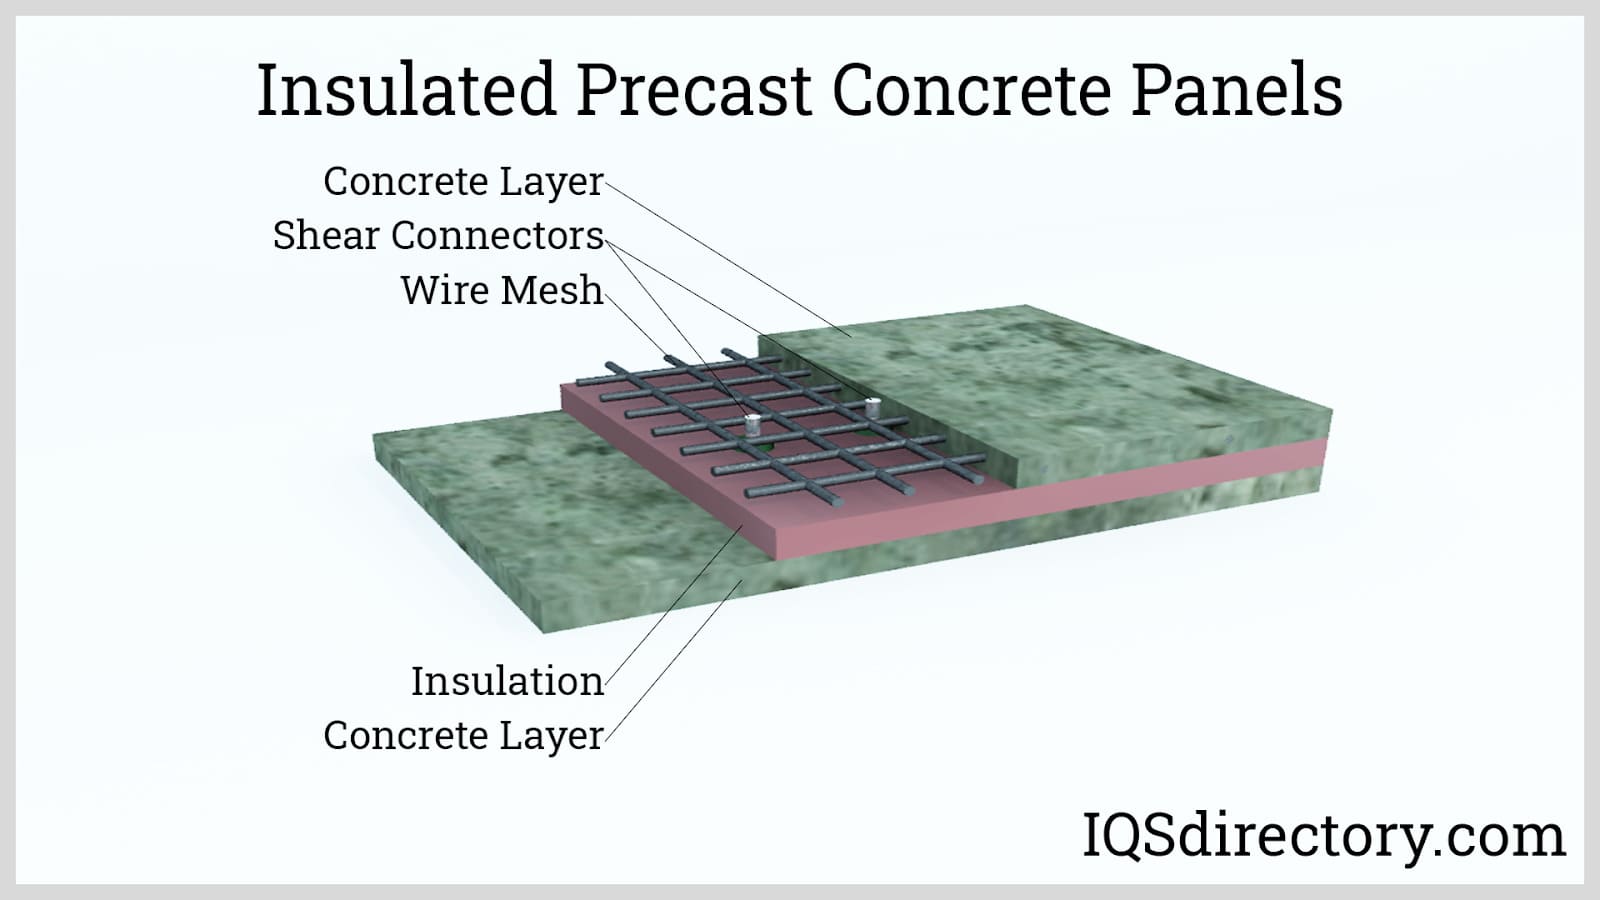 Insulated Precast Concrete Panels